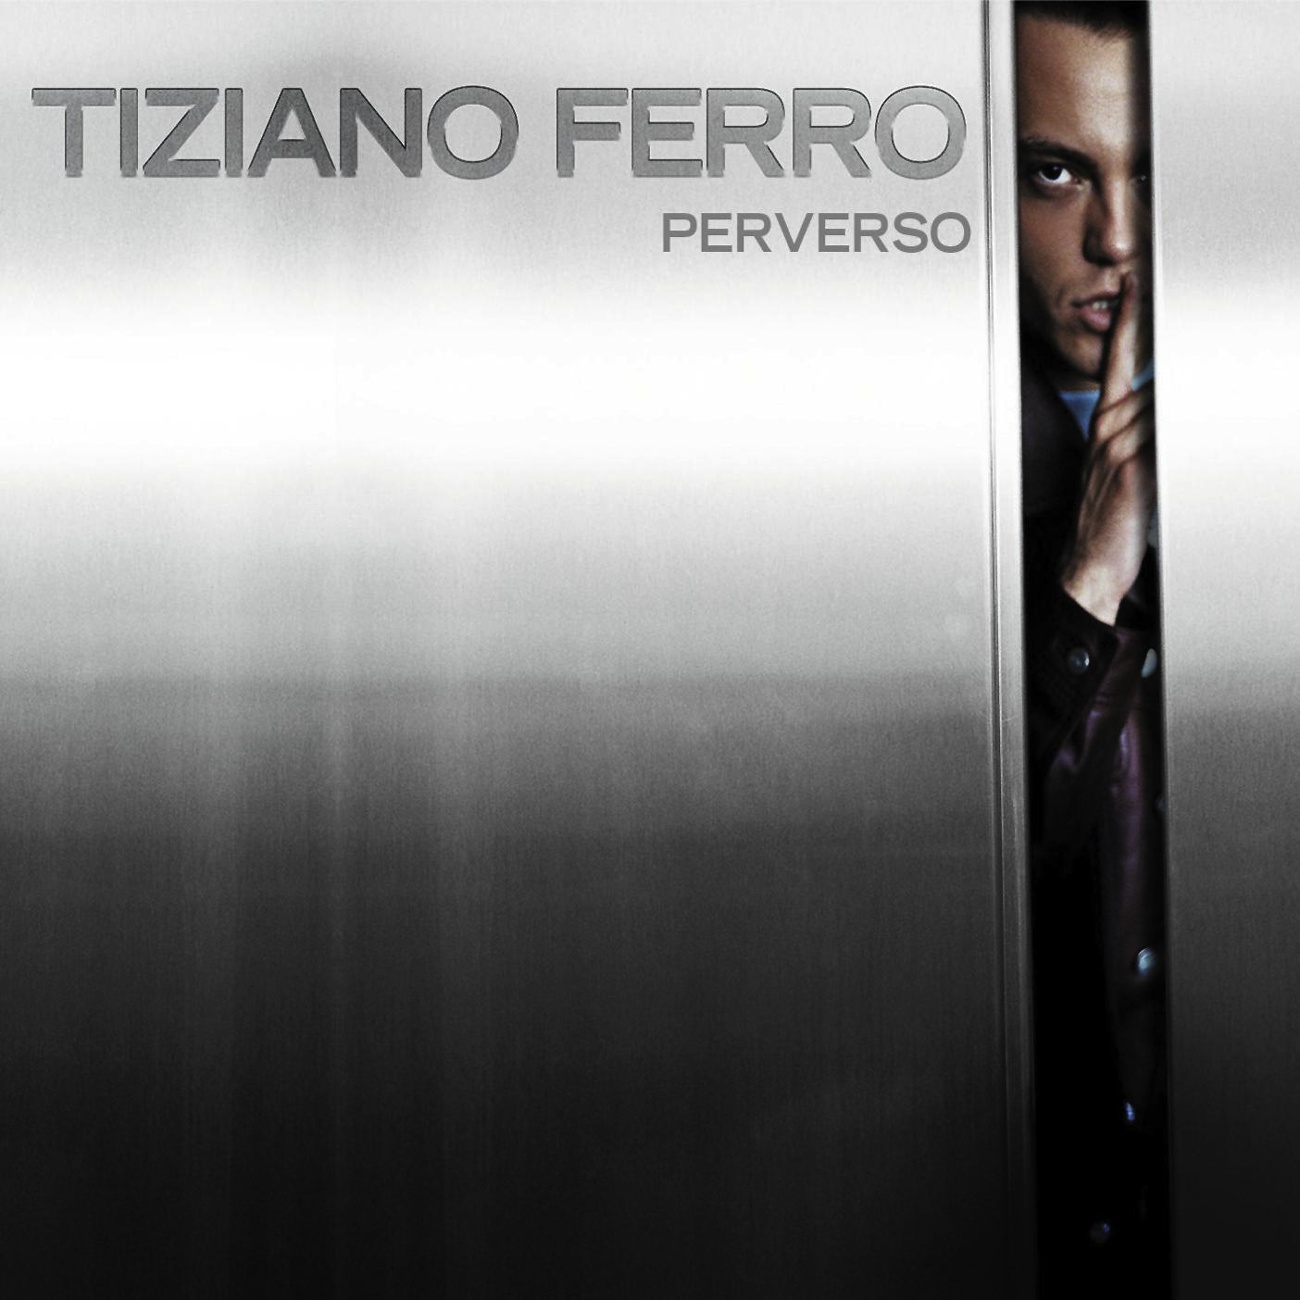 Perverso (Spanish Version)